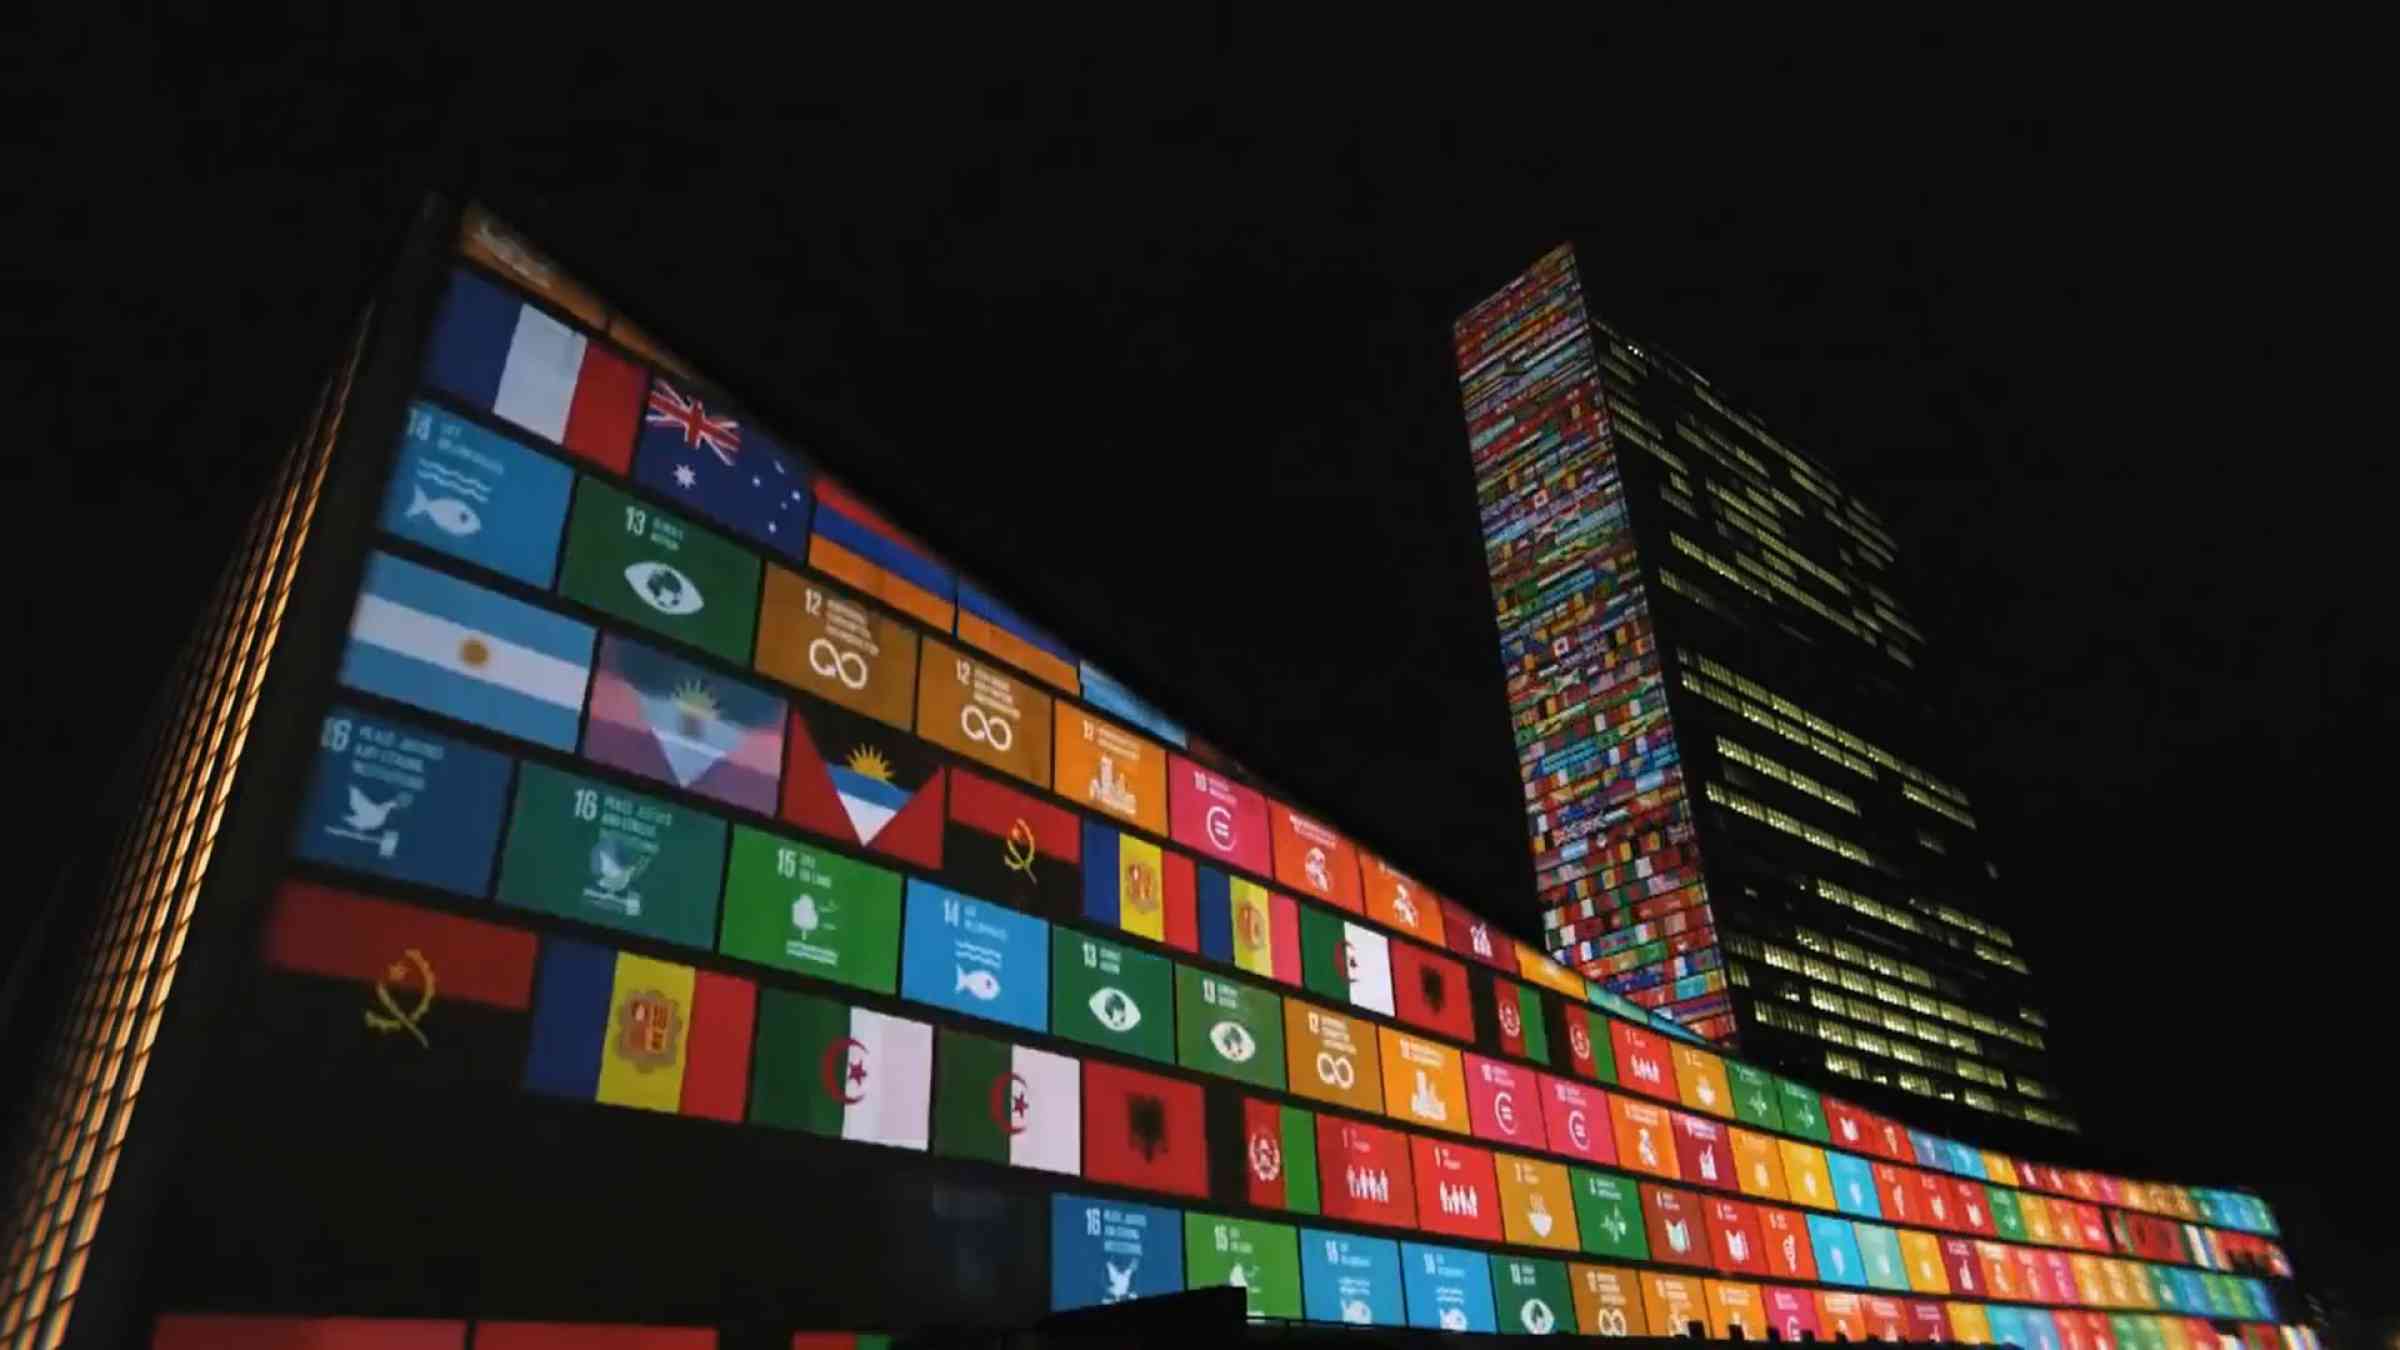 Sustainable development goals icons on wallscreen